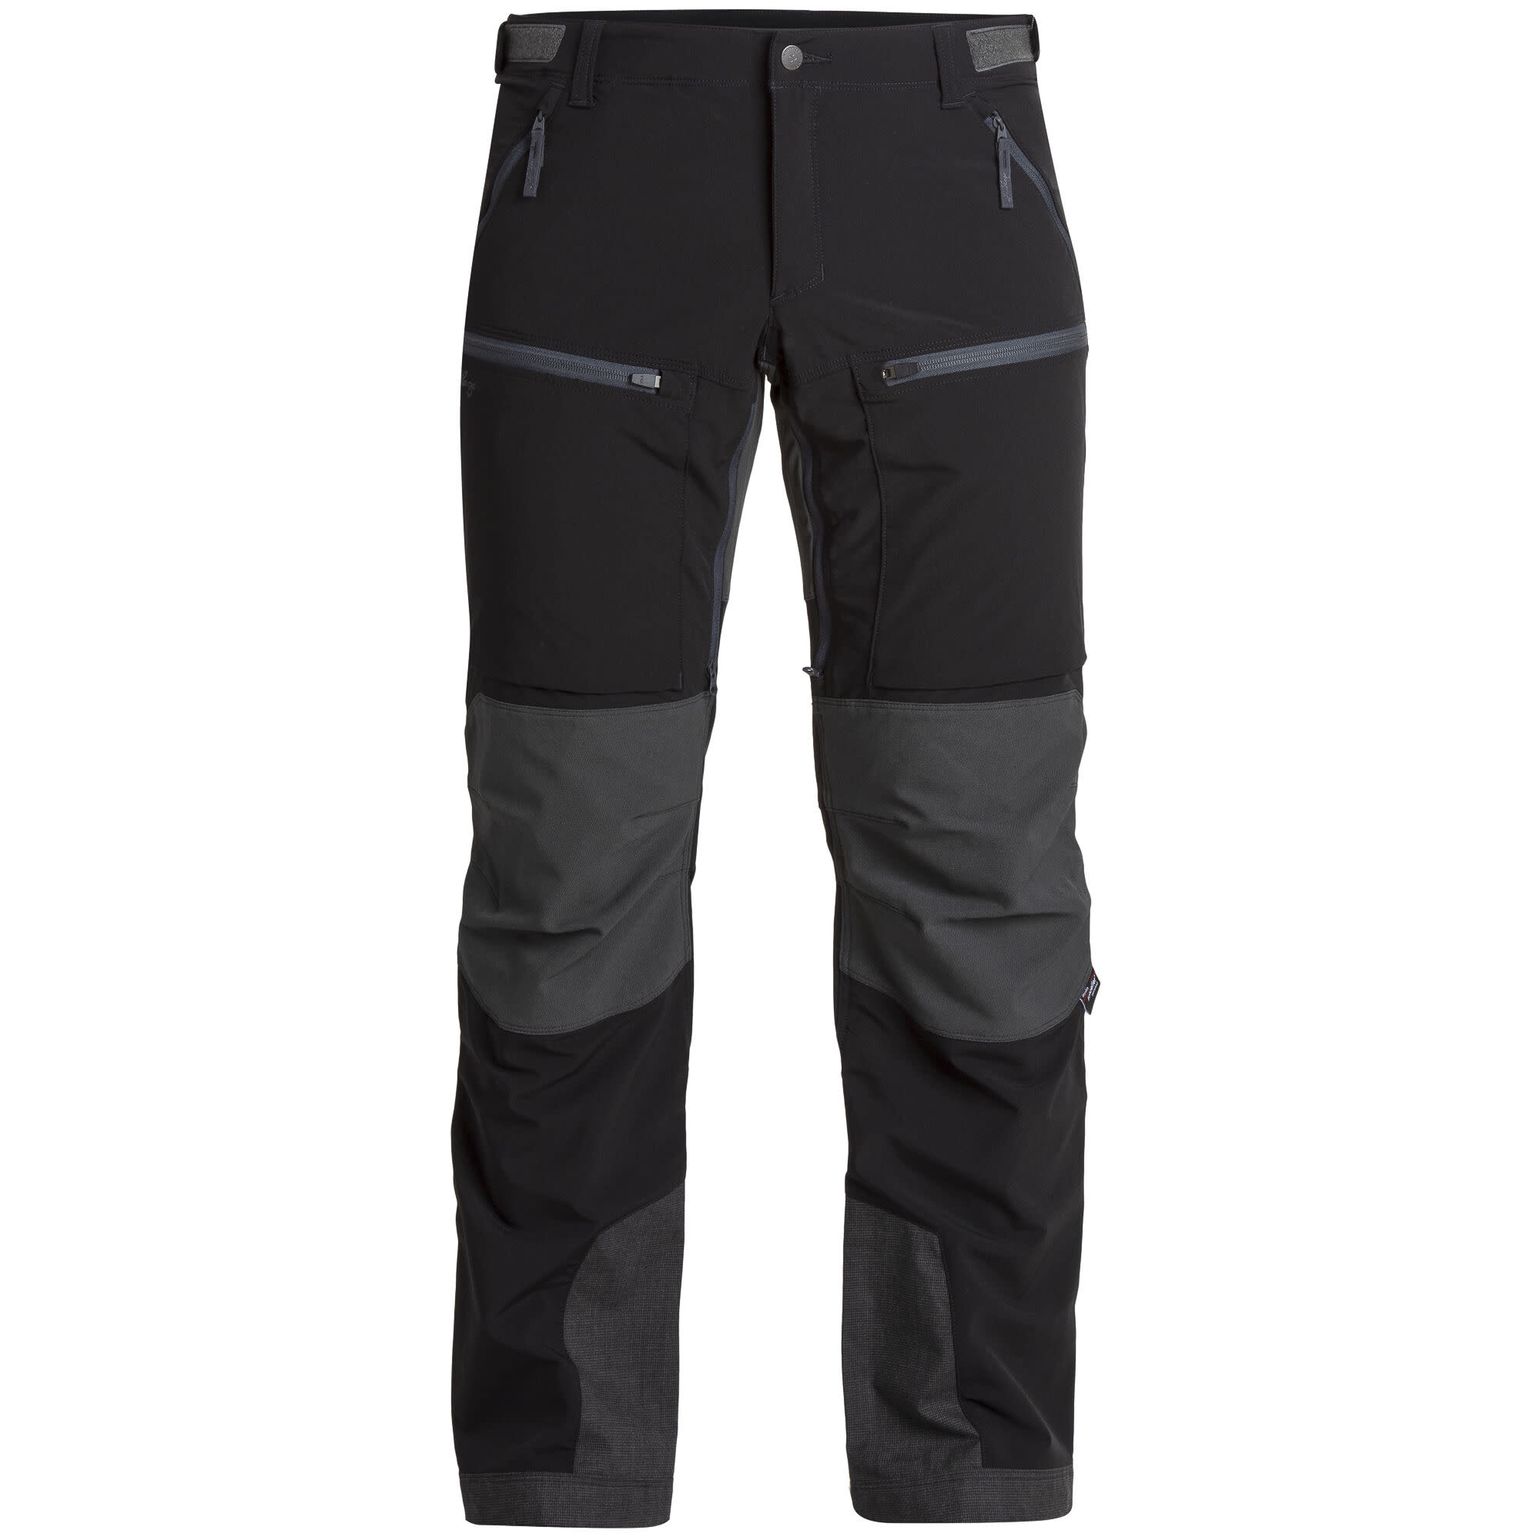 Men's Askro Pro Pant Black/Charcoal